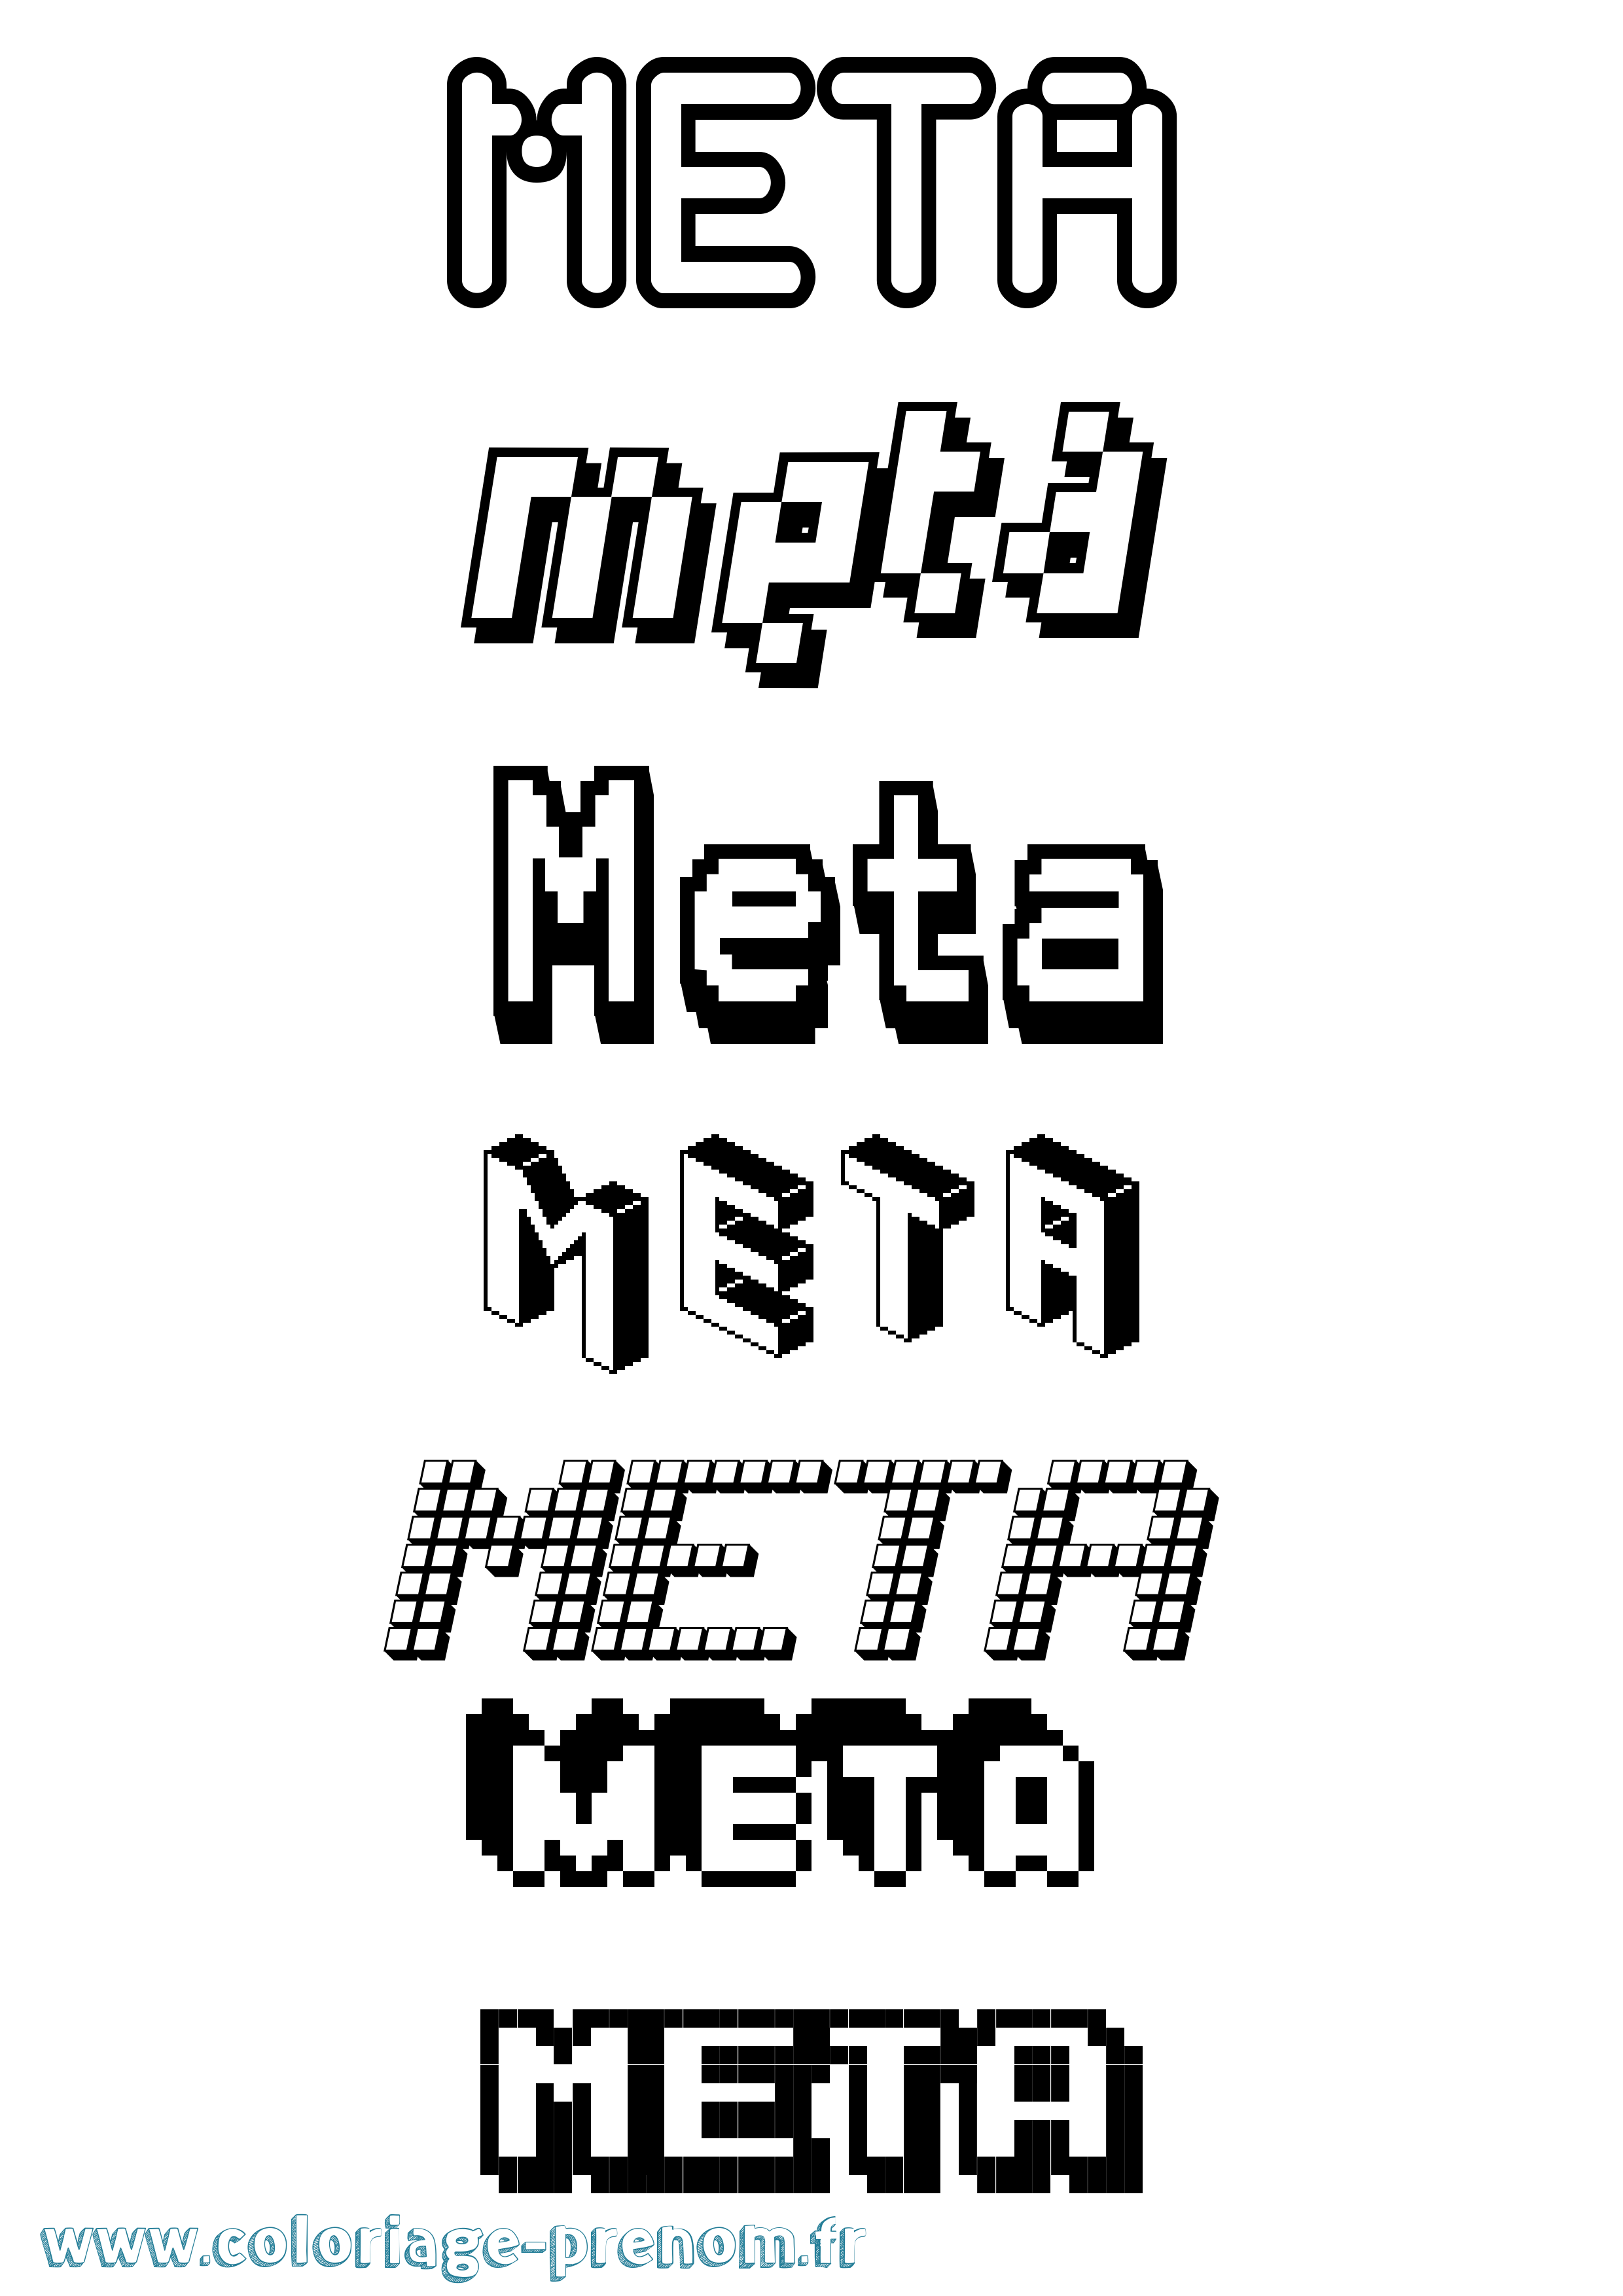 Coloriage prénom Meta Pixel